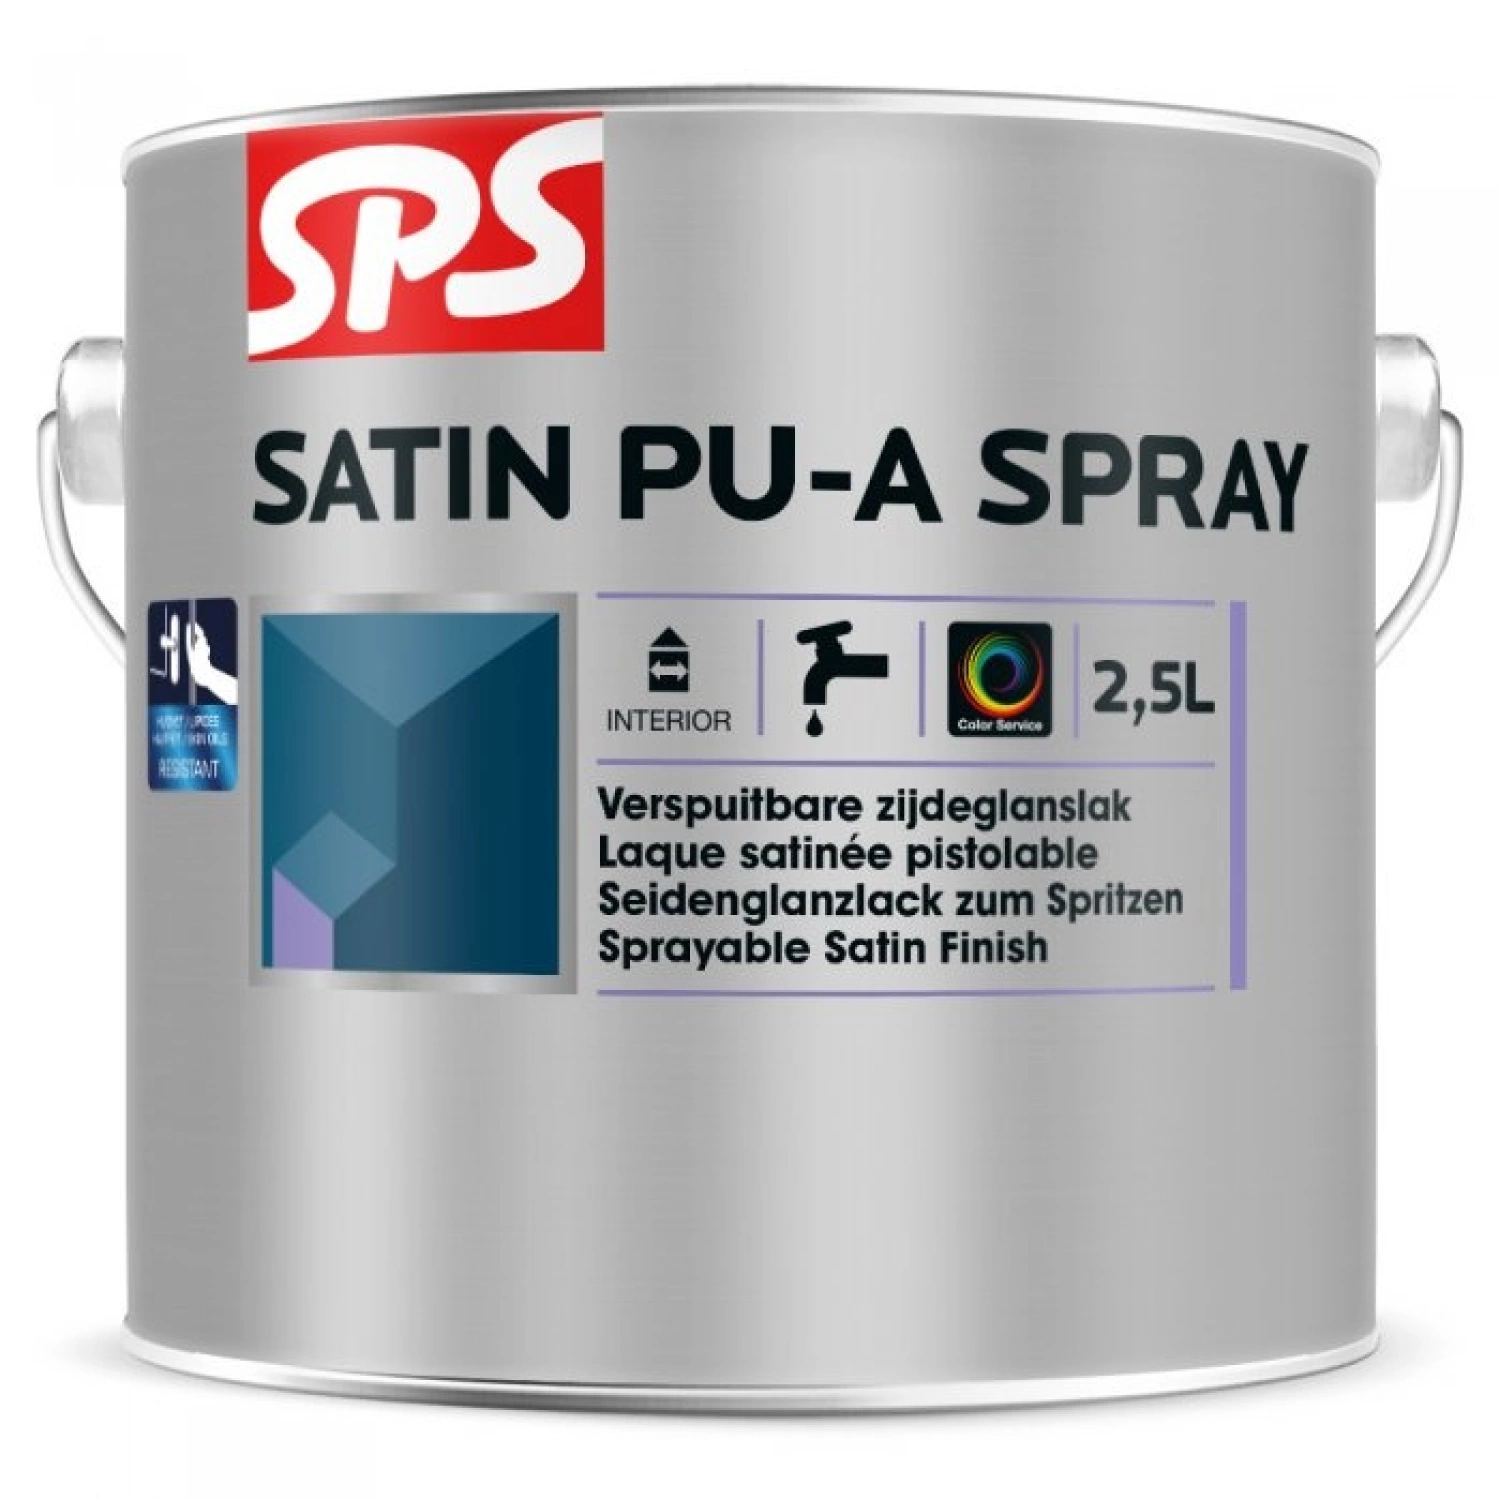 SPS Satin Pu-A Lak Spray - op kleur gemengd - 2,5L-image